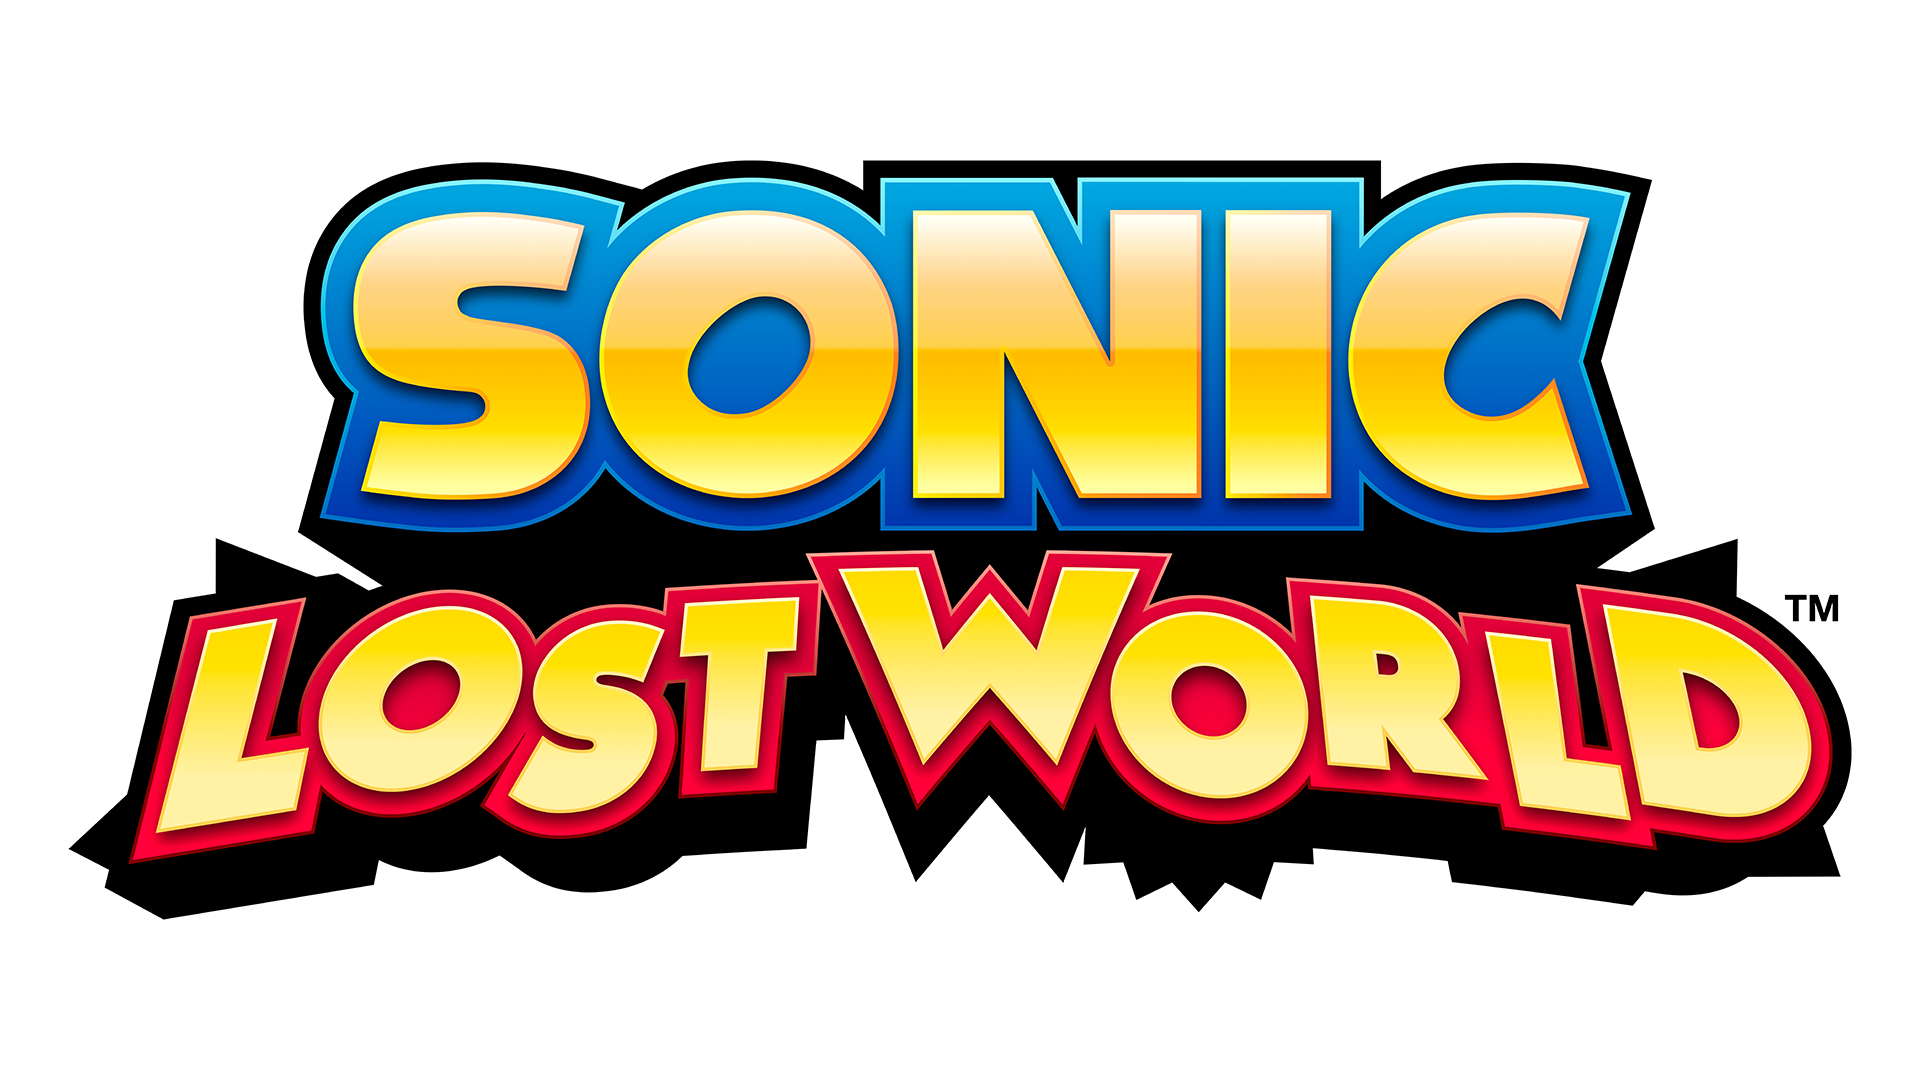 Sonic Lost World Logo